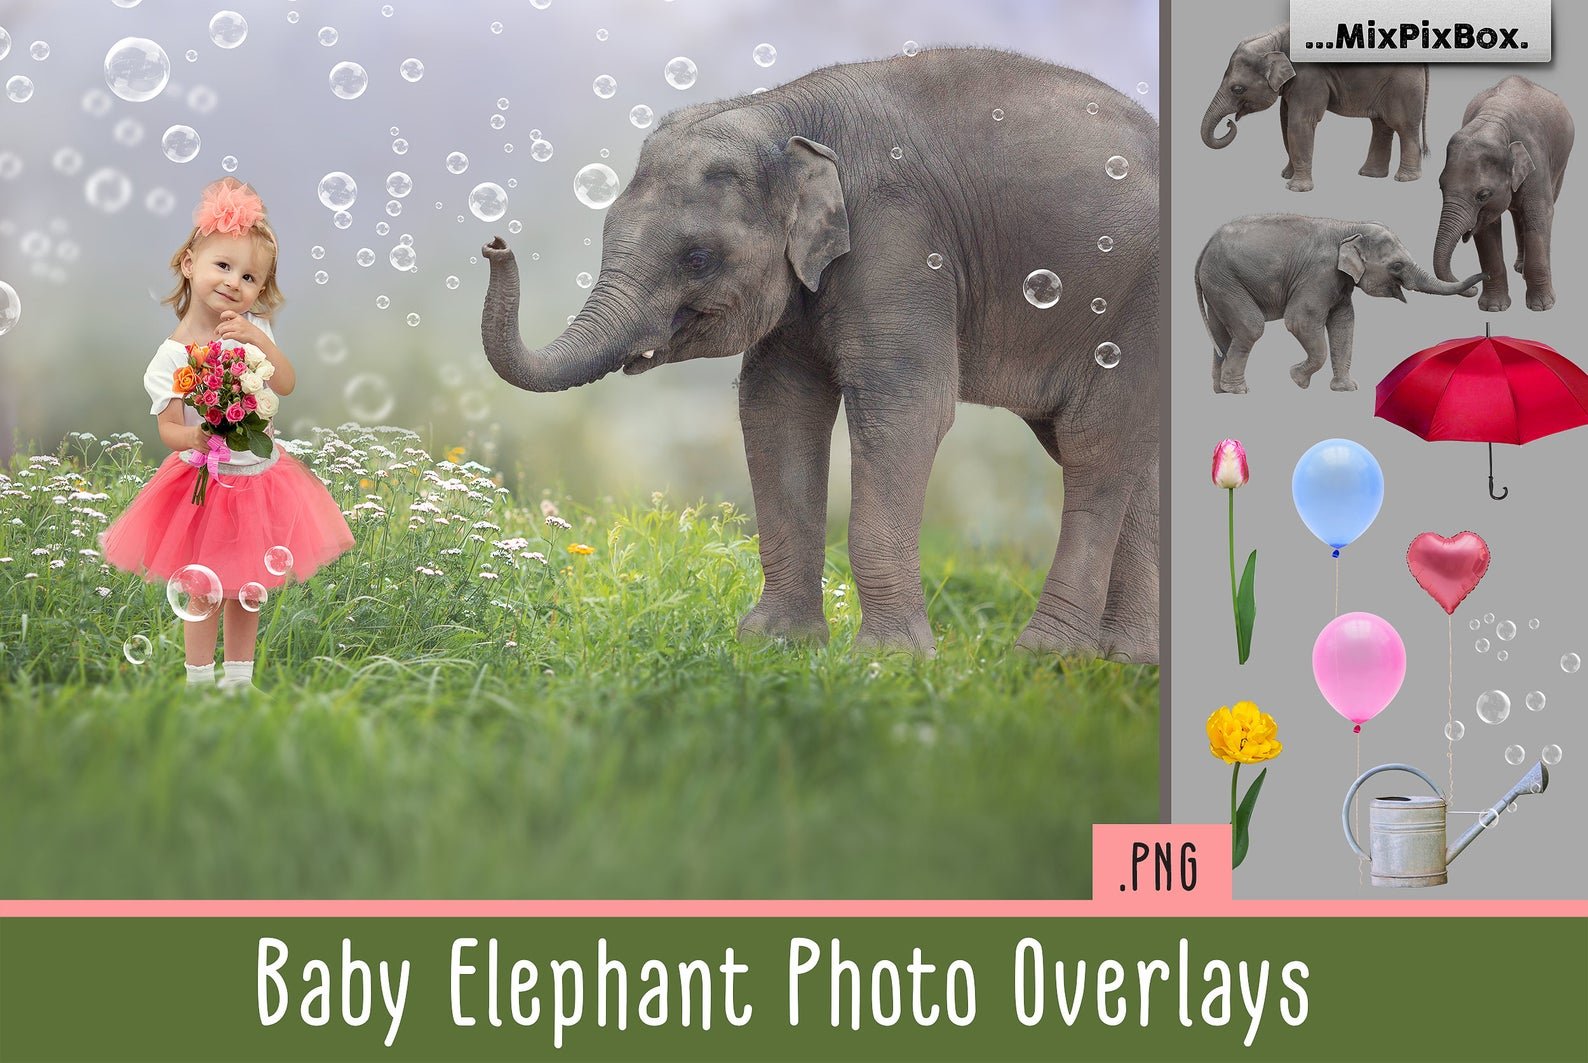 Baby Elephant Photo Overlayscover image.